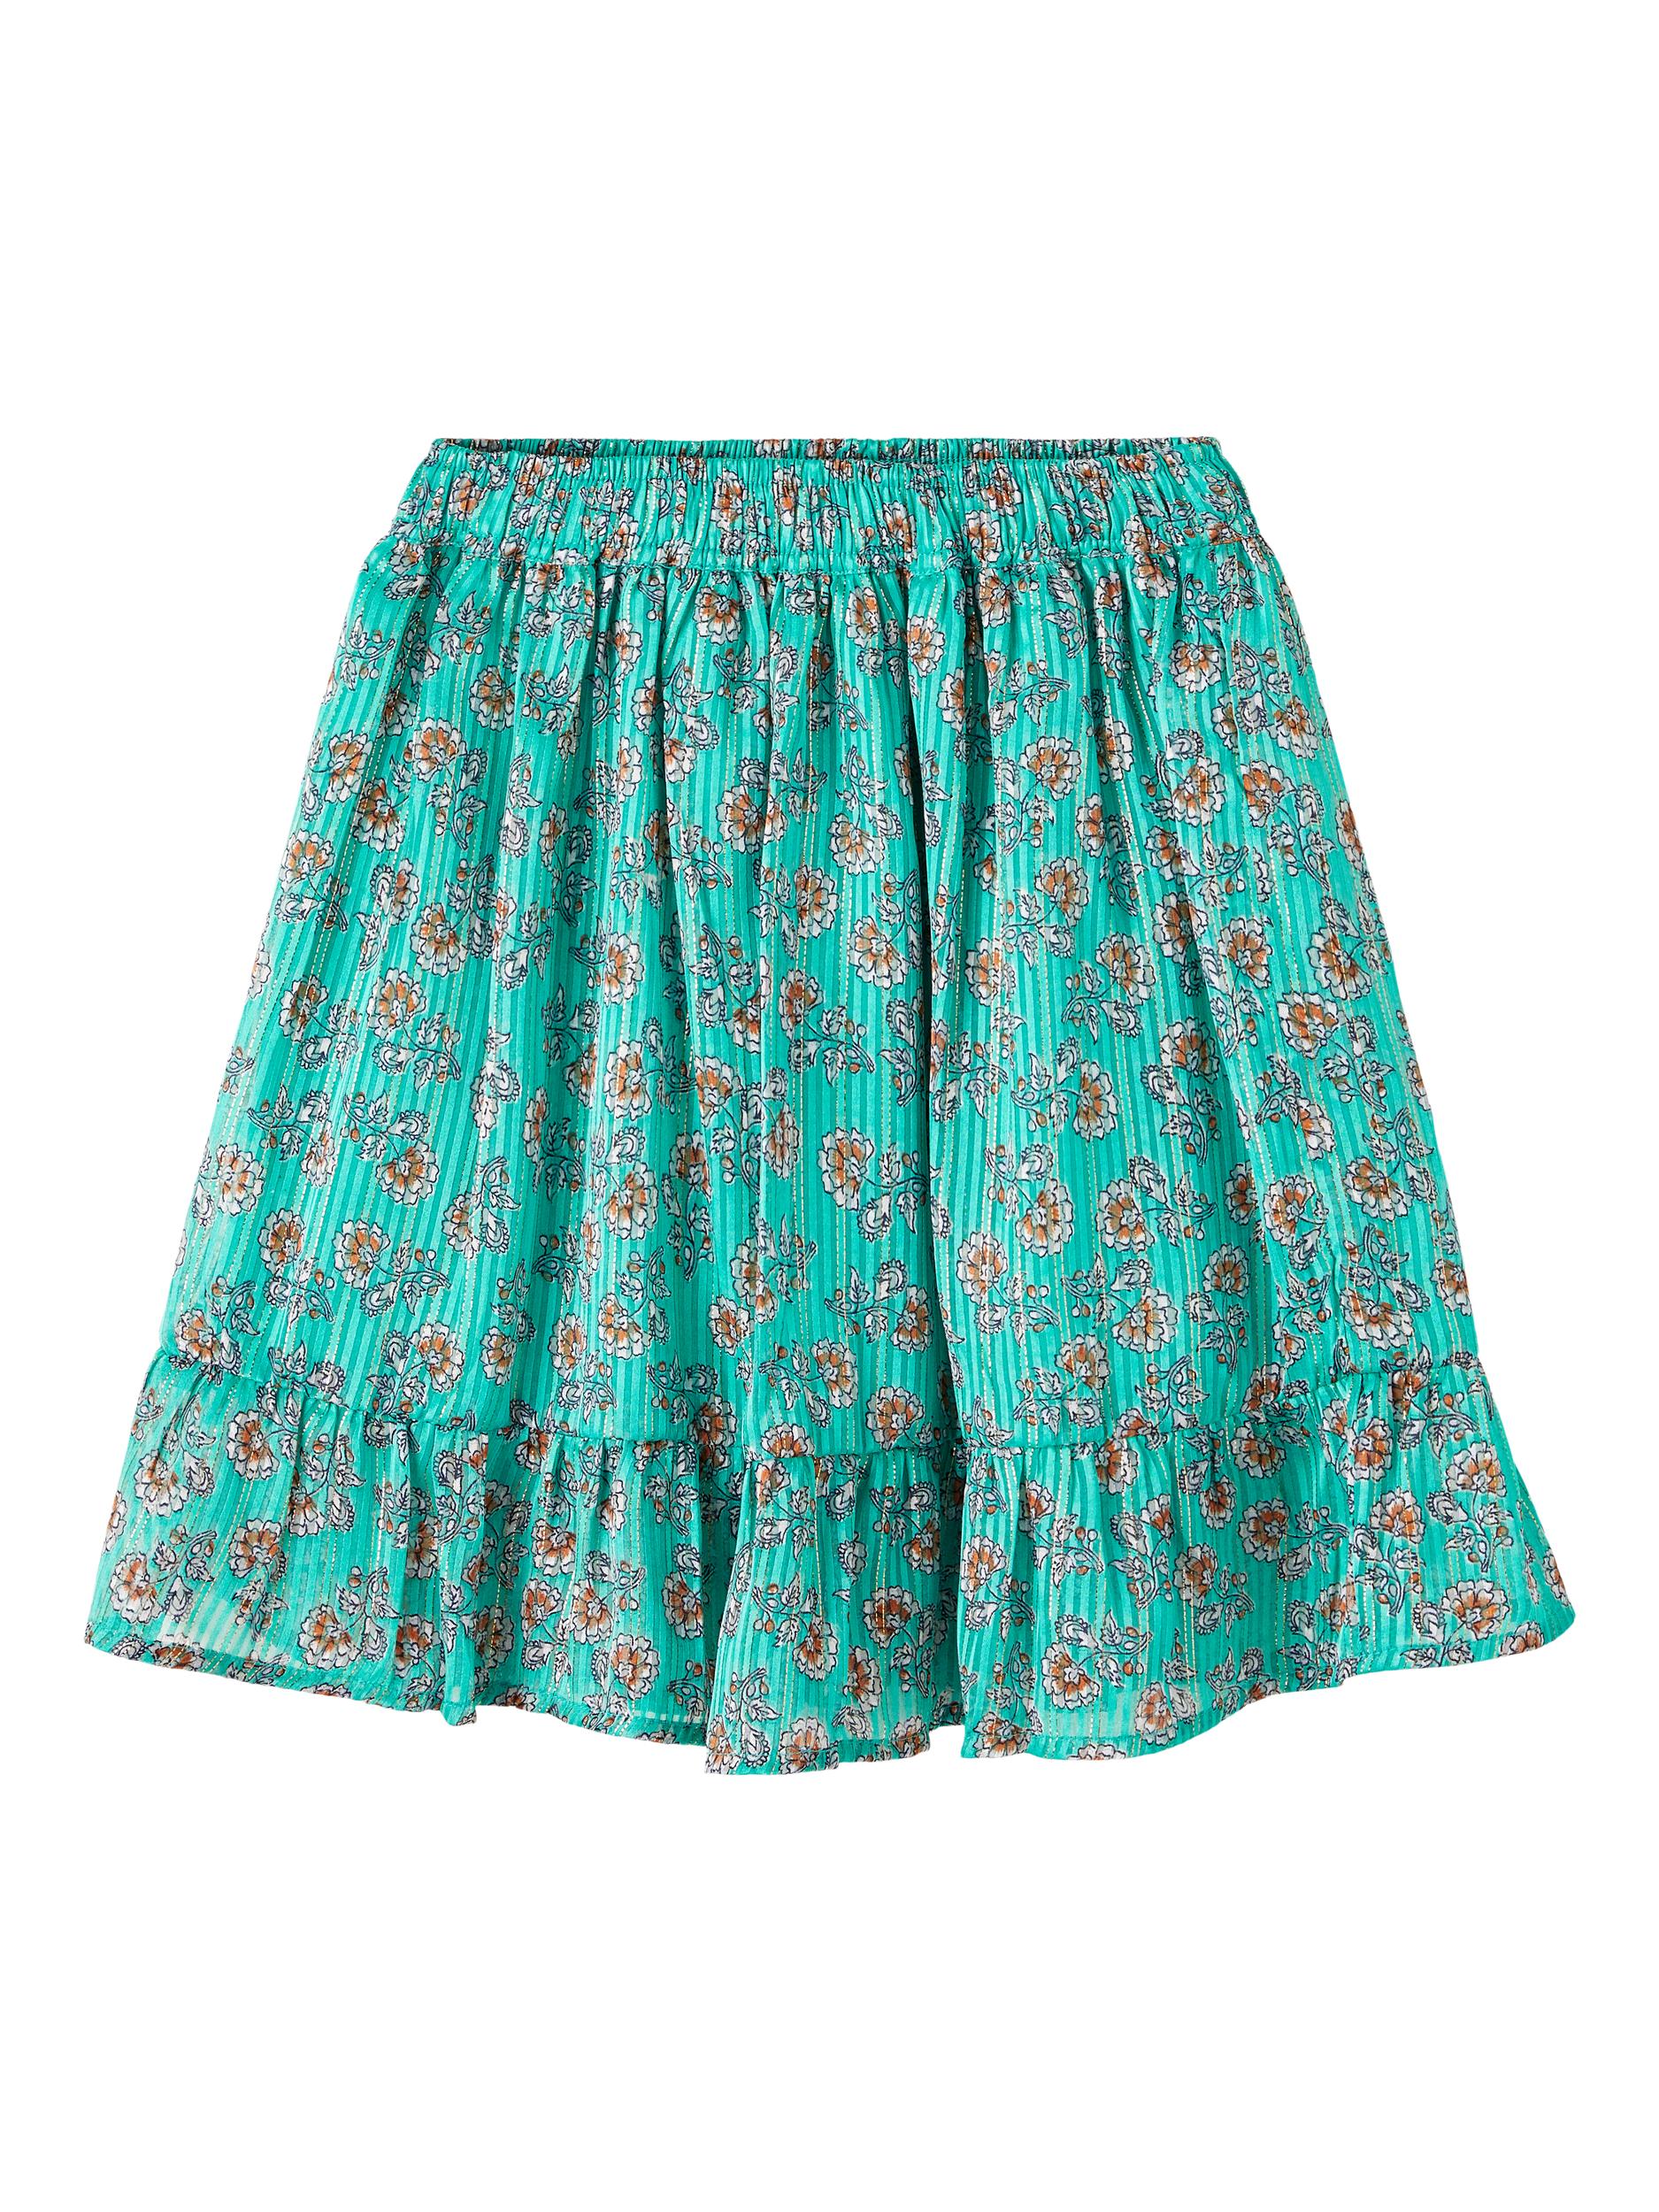 Girl's Emerald Suela Skirt-Front View